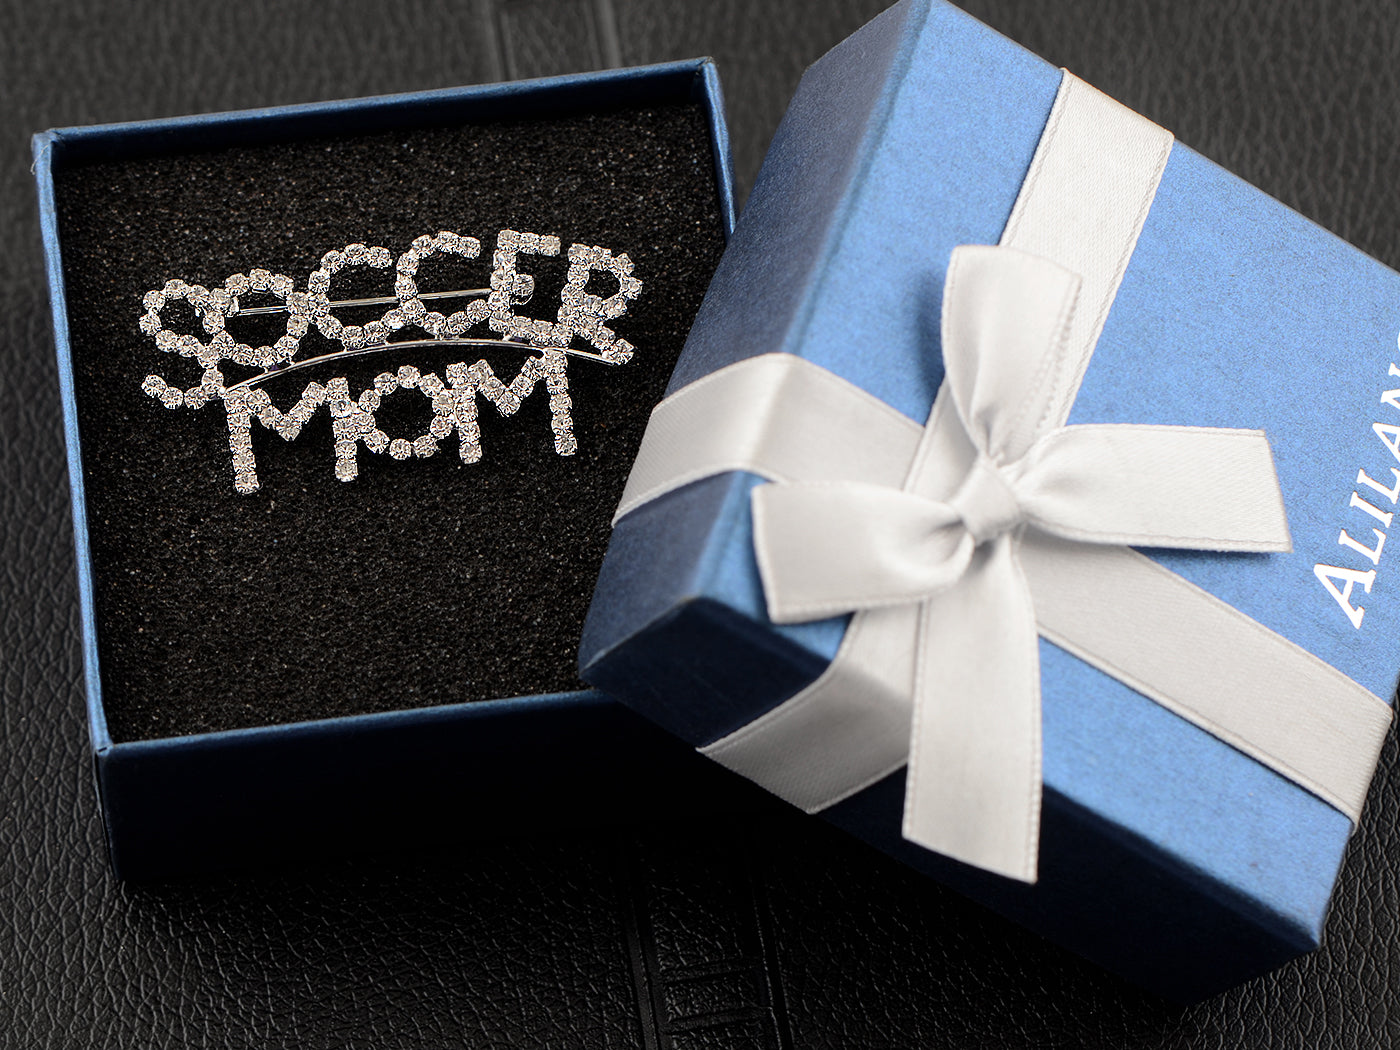 Soccer Mom's Casual Novelty Party Pin Brooch